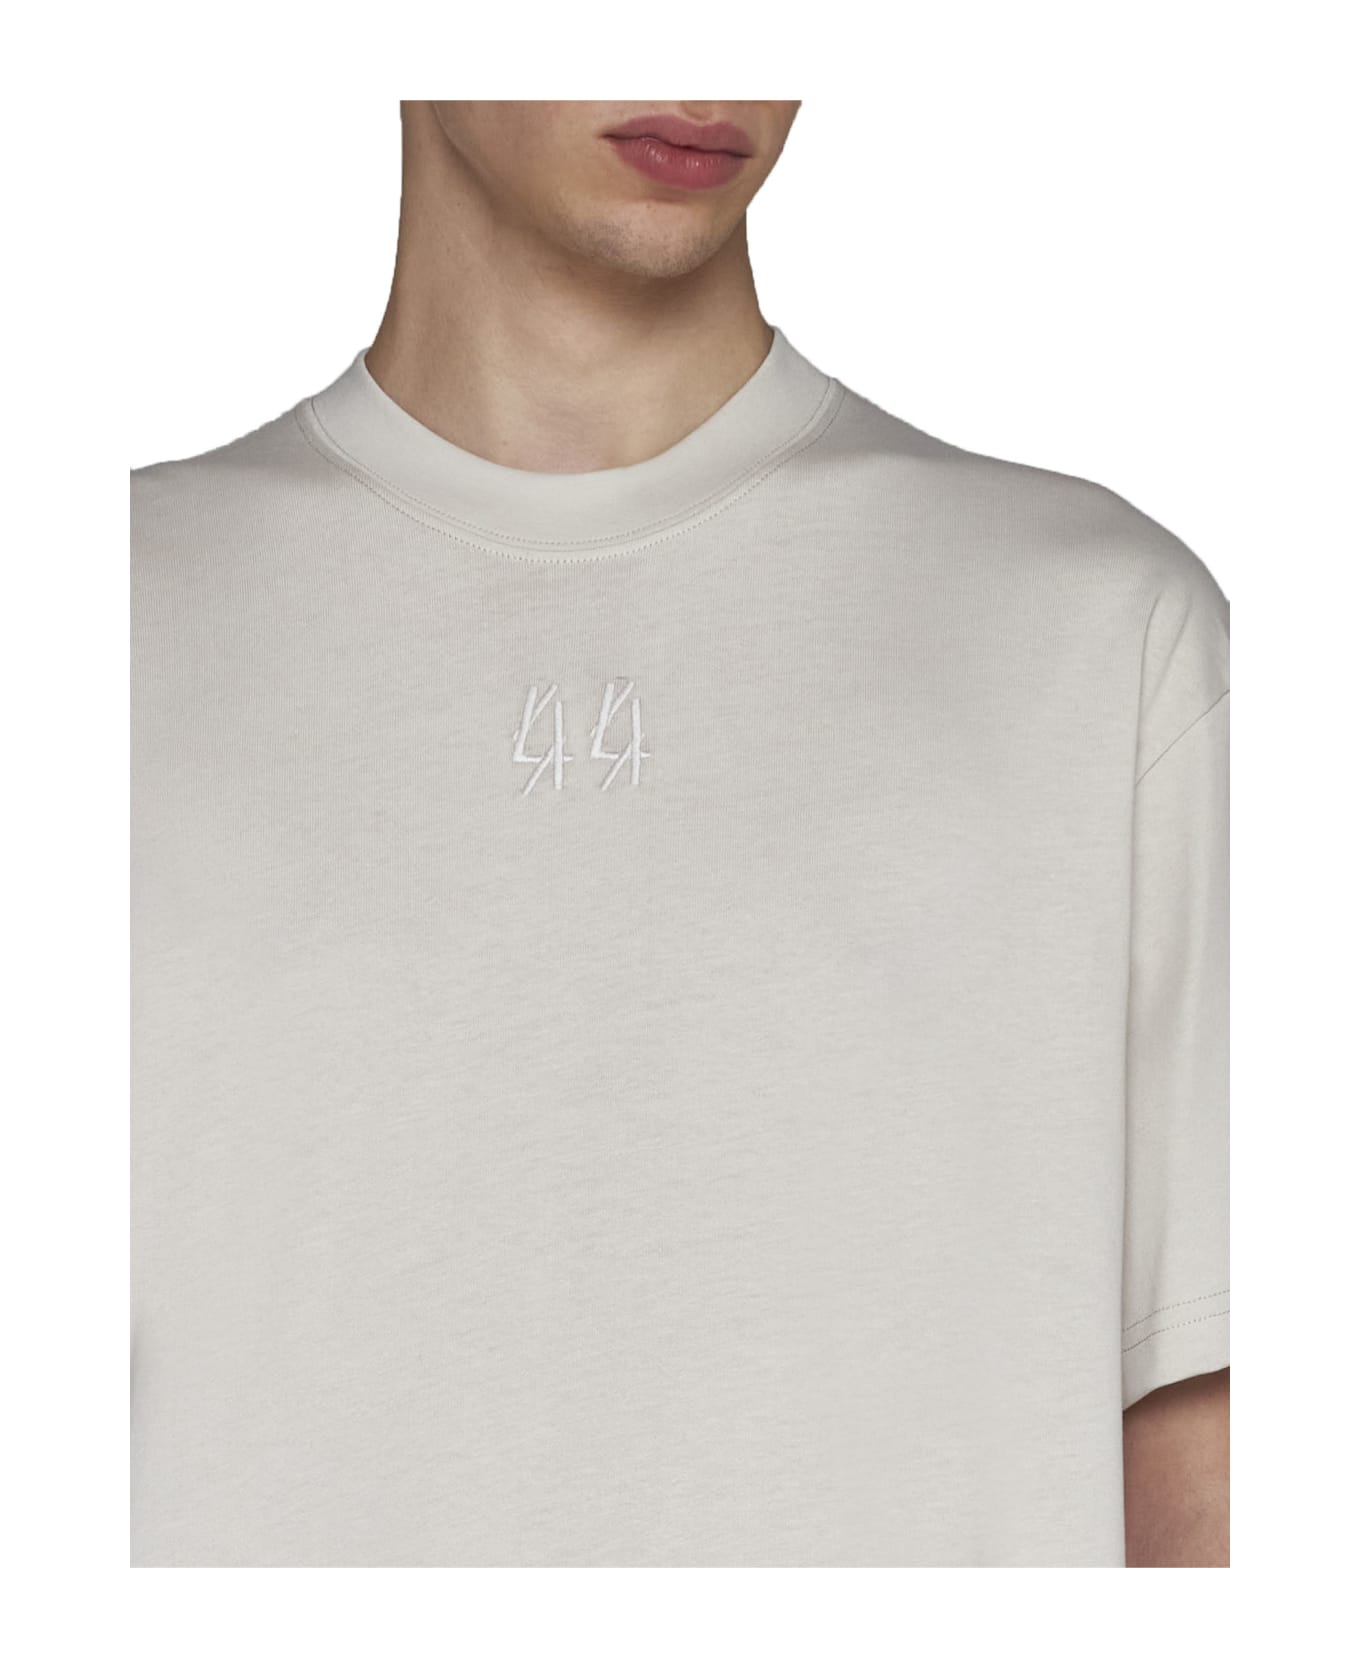 44 Label Group T-Shirt - Dirty white+44 gaffer print シャツ